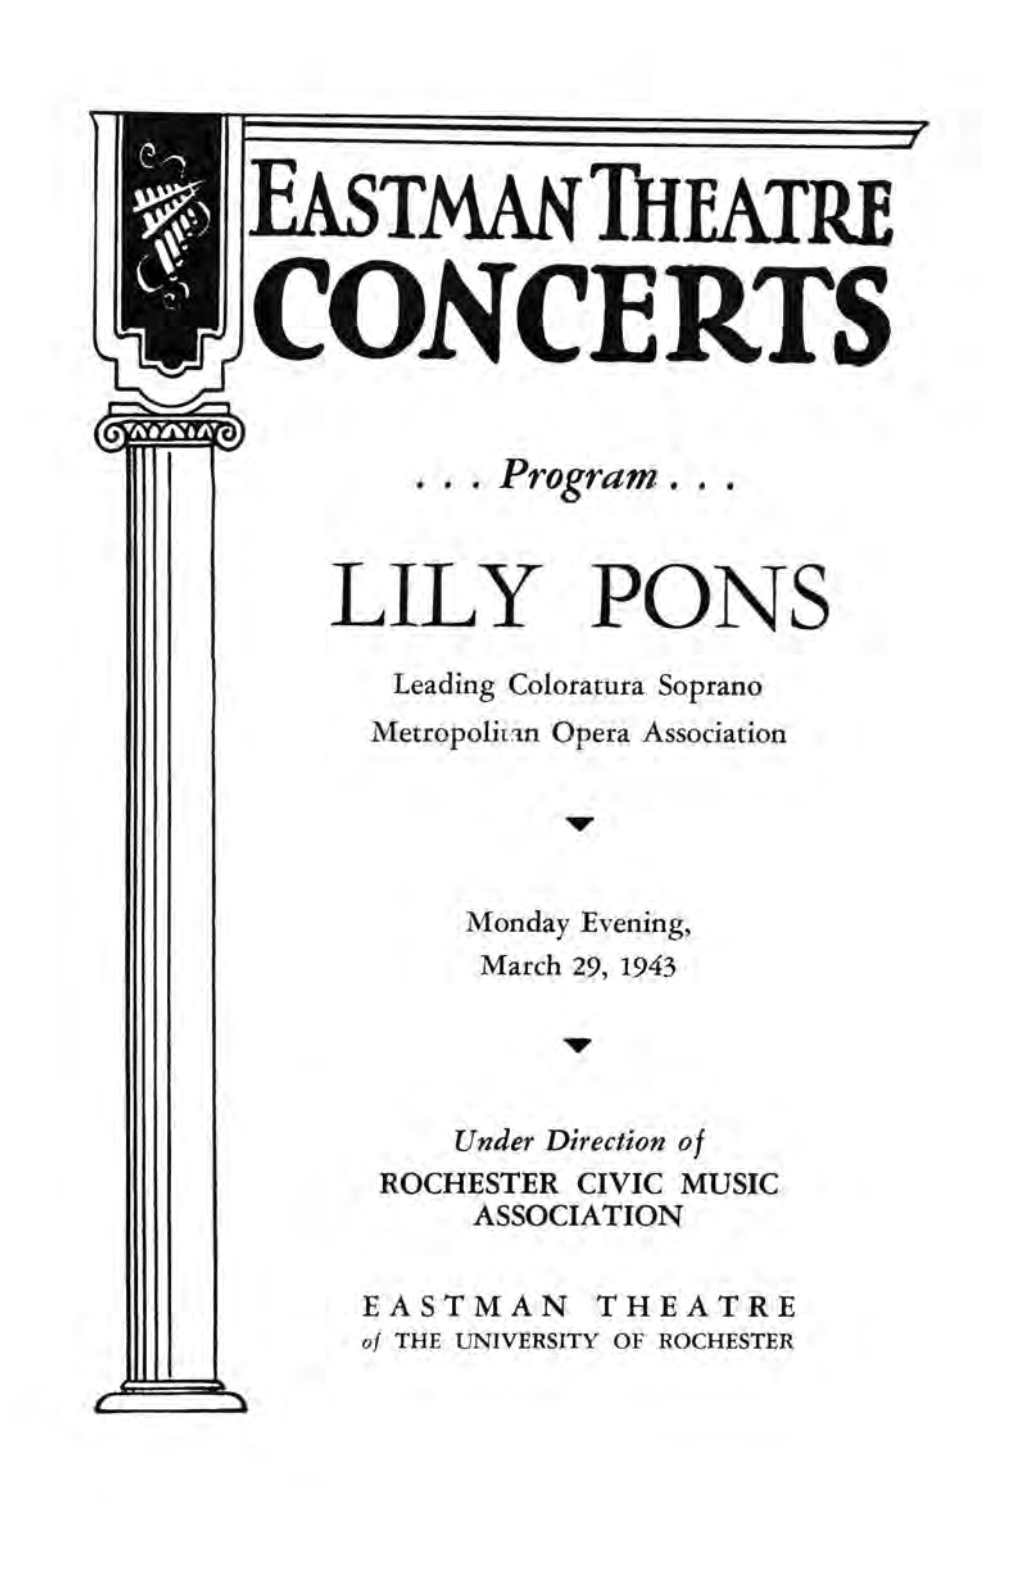 Eastman Theatre Concerts; March 29, 1943; Lilt Pons